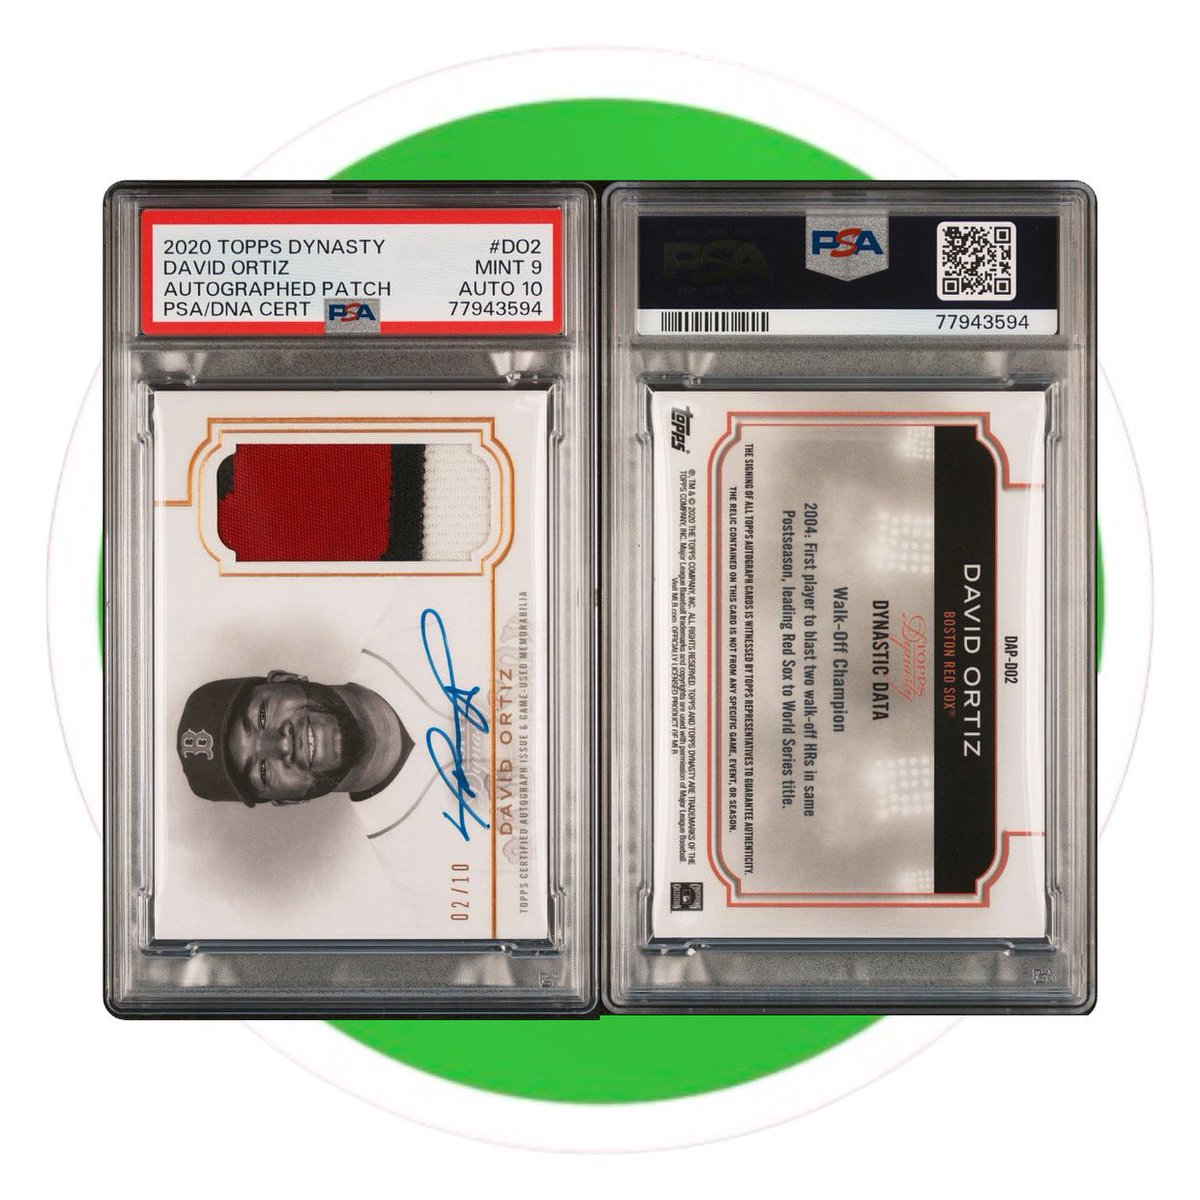 ⚾️ DAVID ORTIZ ⚾️
2020 #topps #dynasty #autograph #patch #davidortiz /10 #redsox #psa9 #mint #psacard #graded #slabbed #collect #thehobby #whodoyoucollect #tradingcardsandthings #boston #bostonredsox #mlb #baseball #bigpapi #dirtywater #redsoxnation #tradingcards #tctsportscards